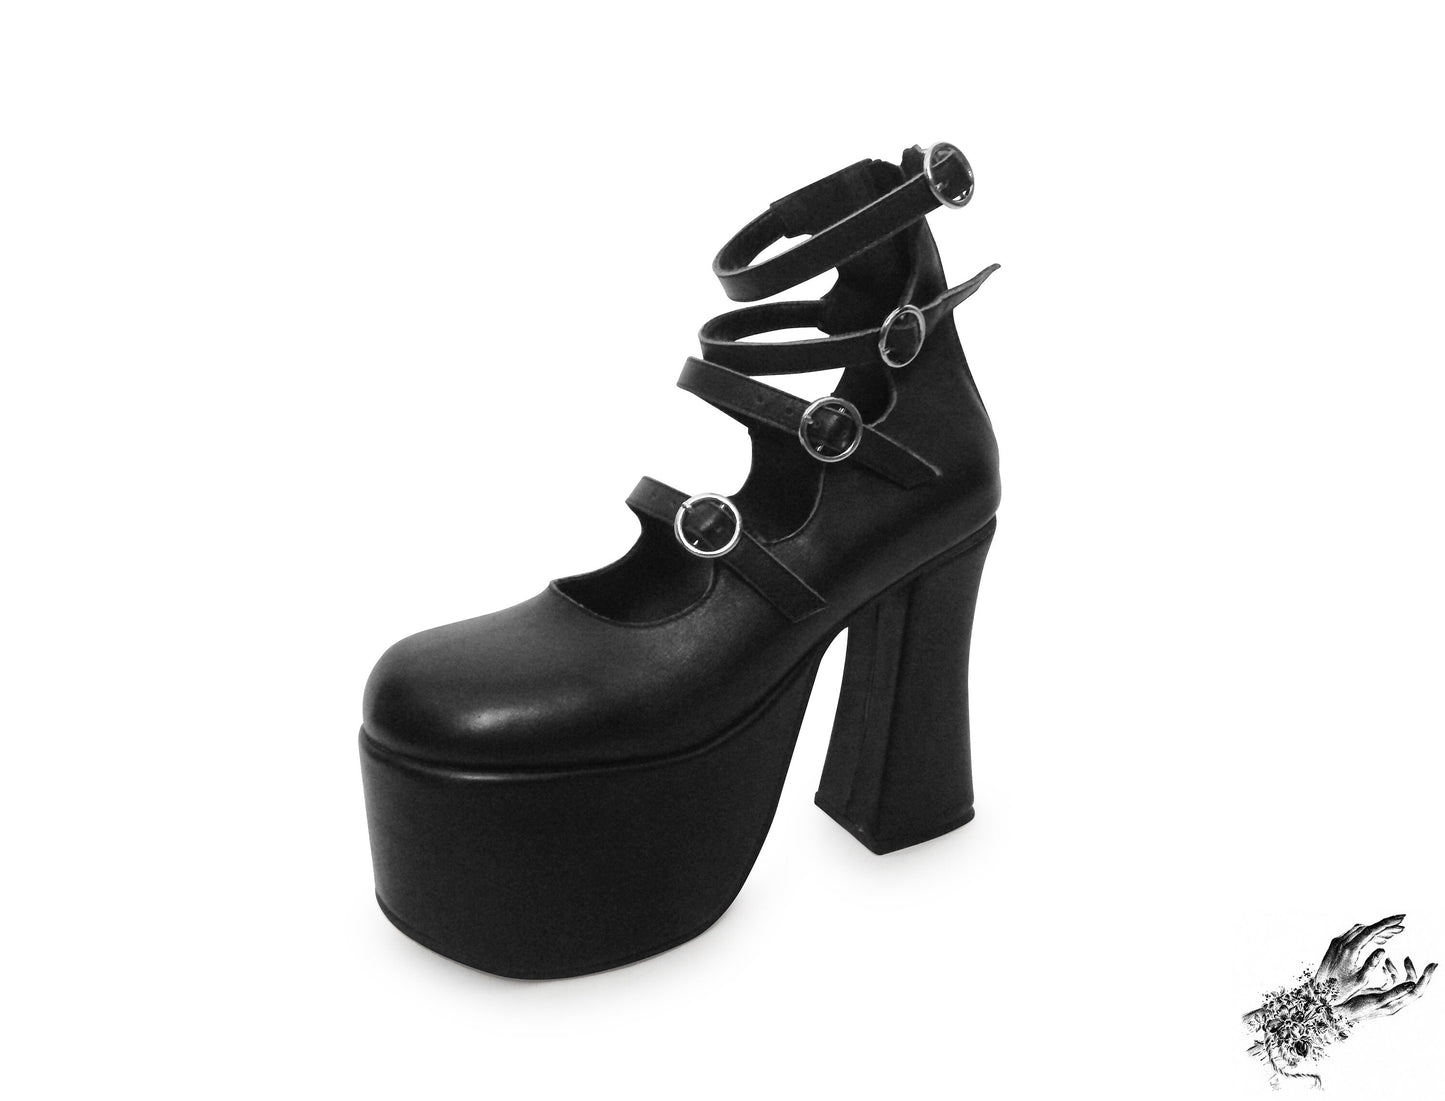 Black Matte Leather Platform Heels, "New Heights" Gothic Platform Heels